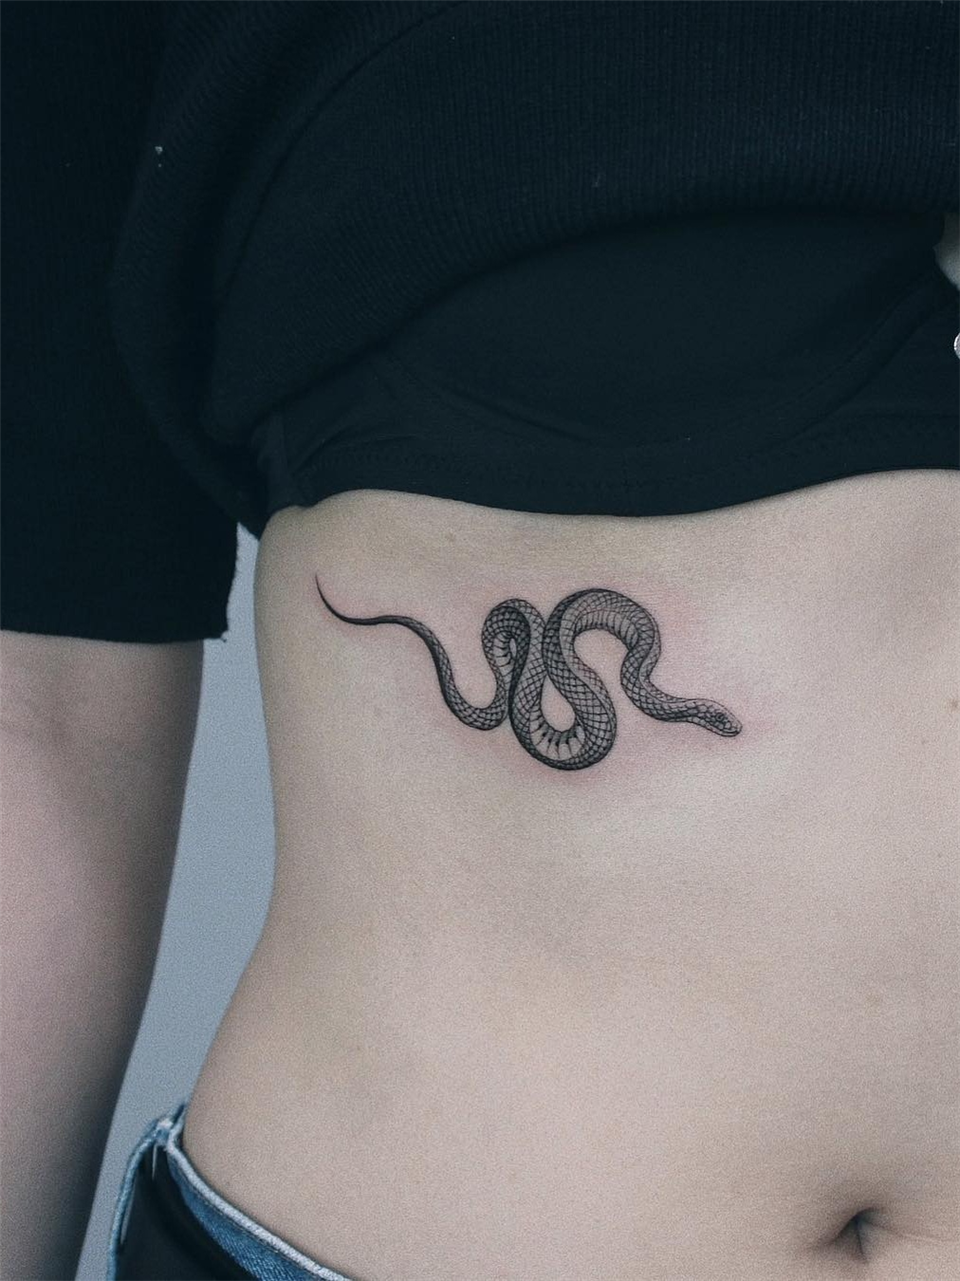 Small Snake Tattoos